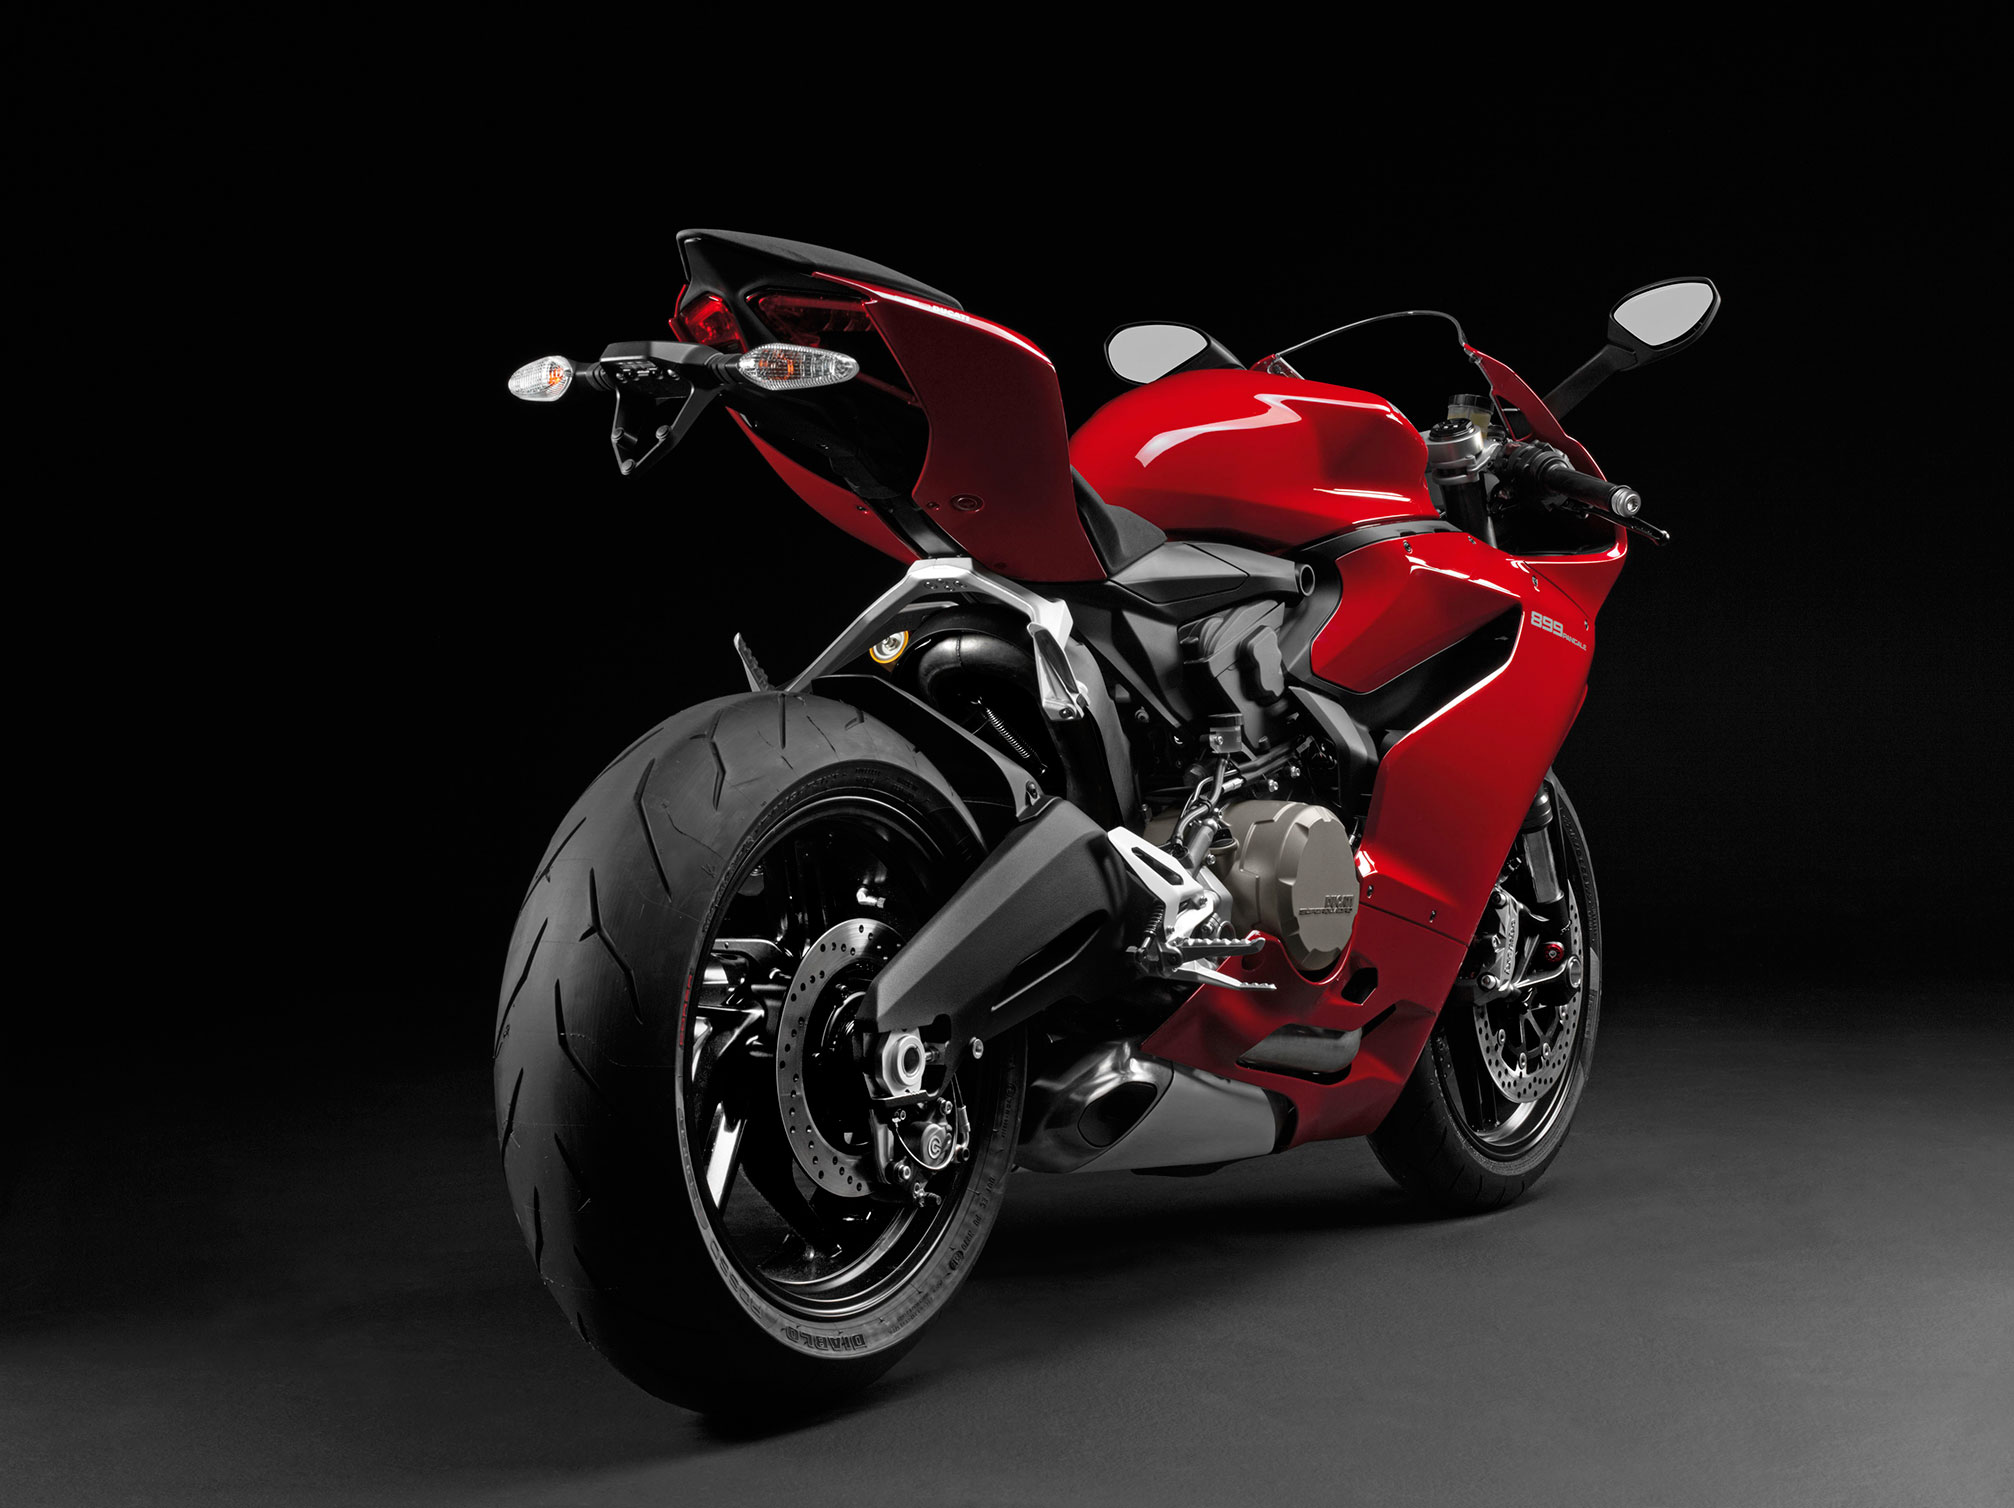 2014 Ducati Superbike 899 Panigale g wallpaper 2014x1508 2014x1508